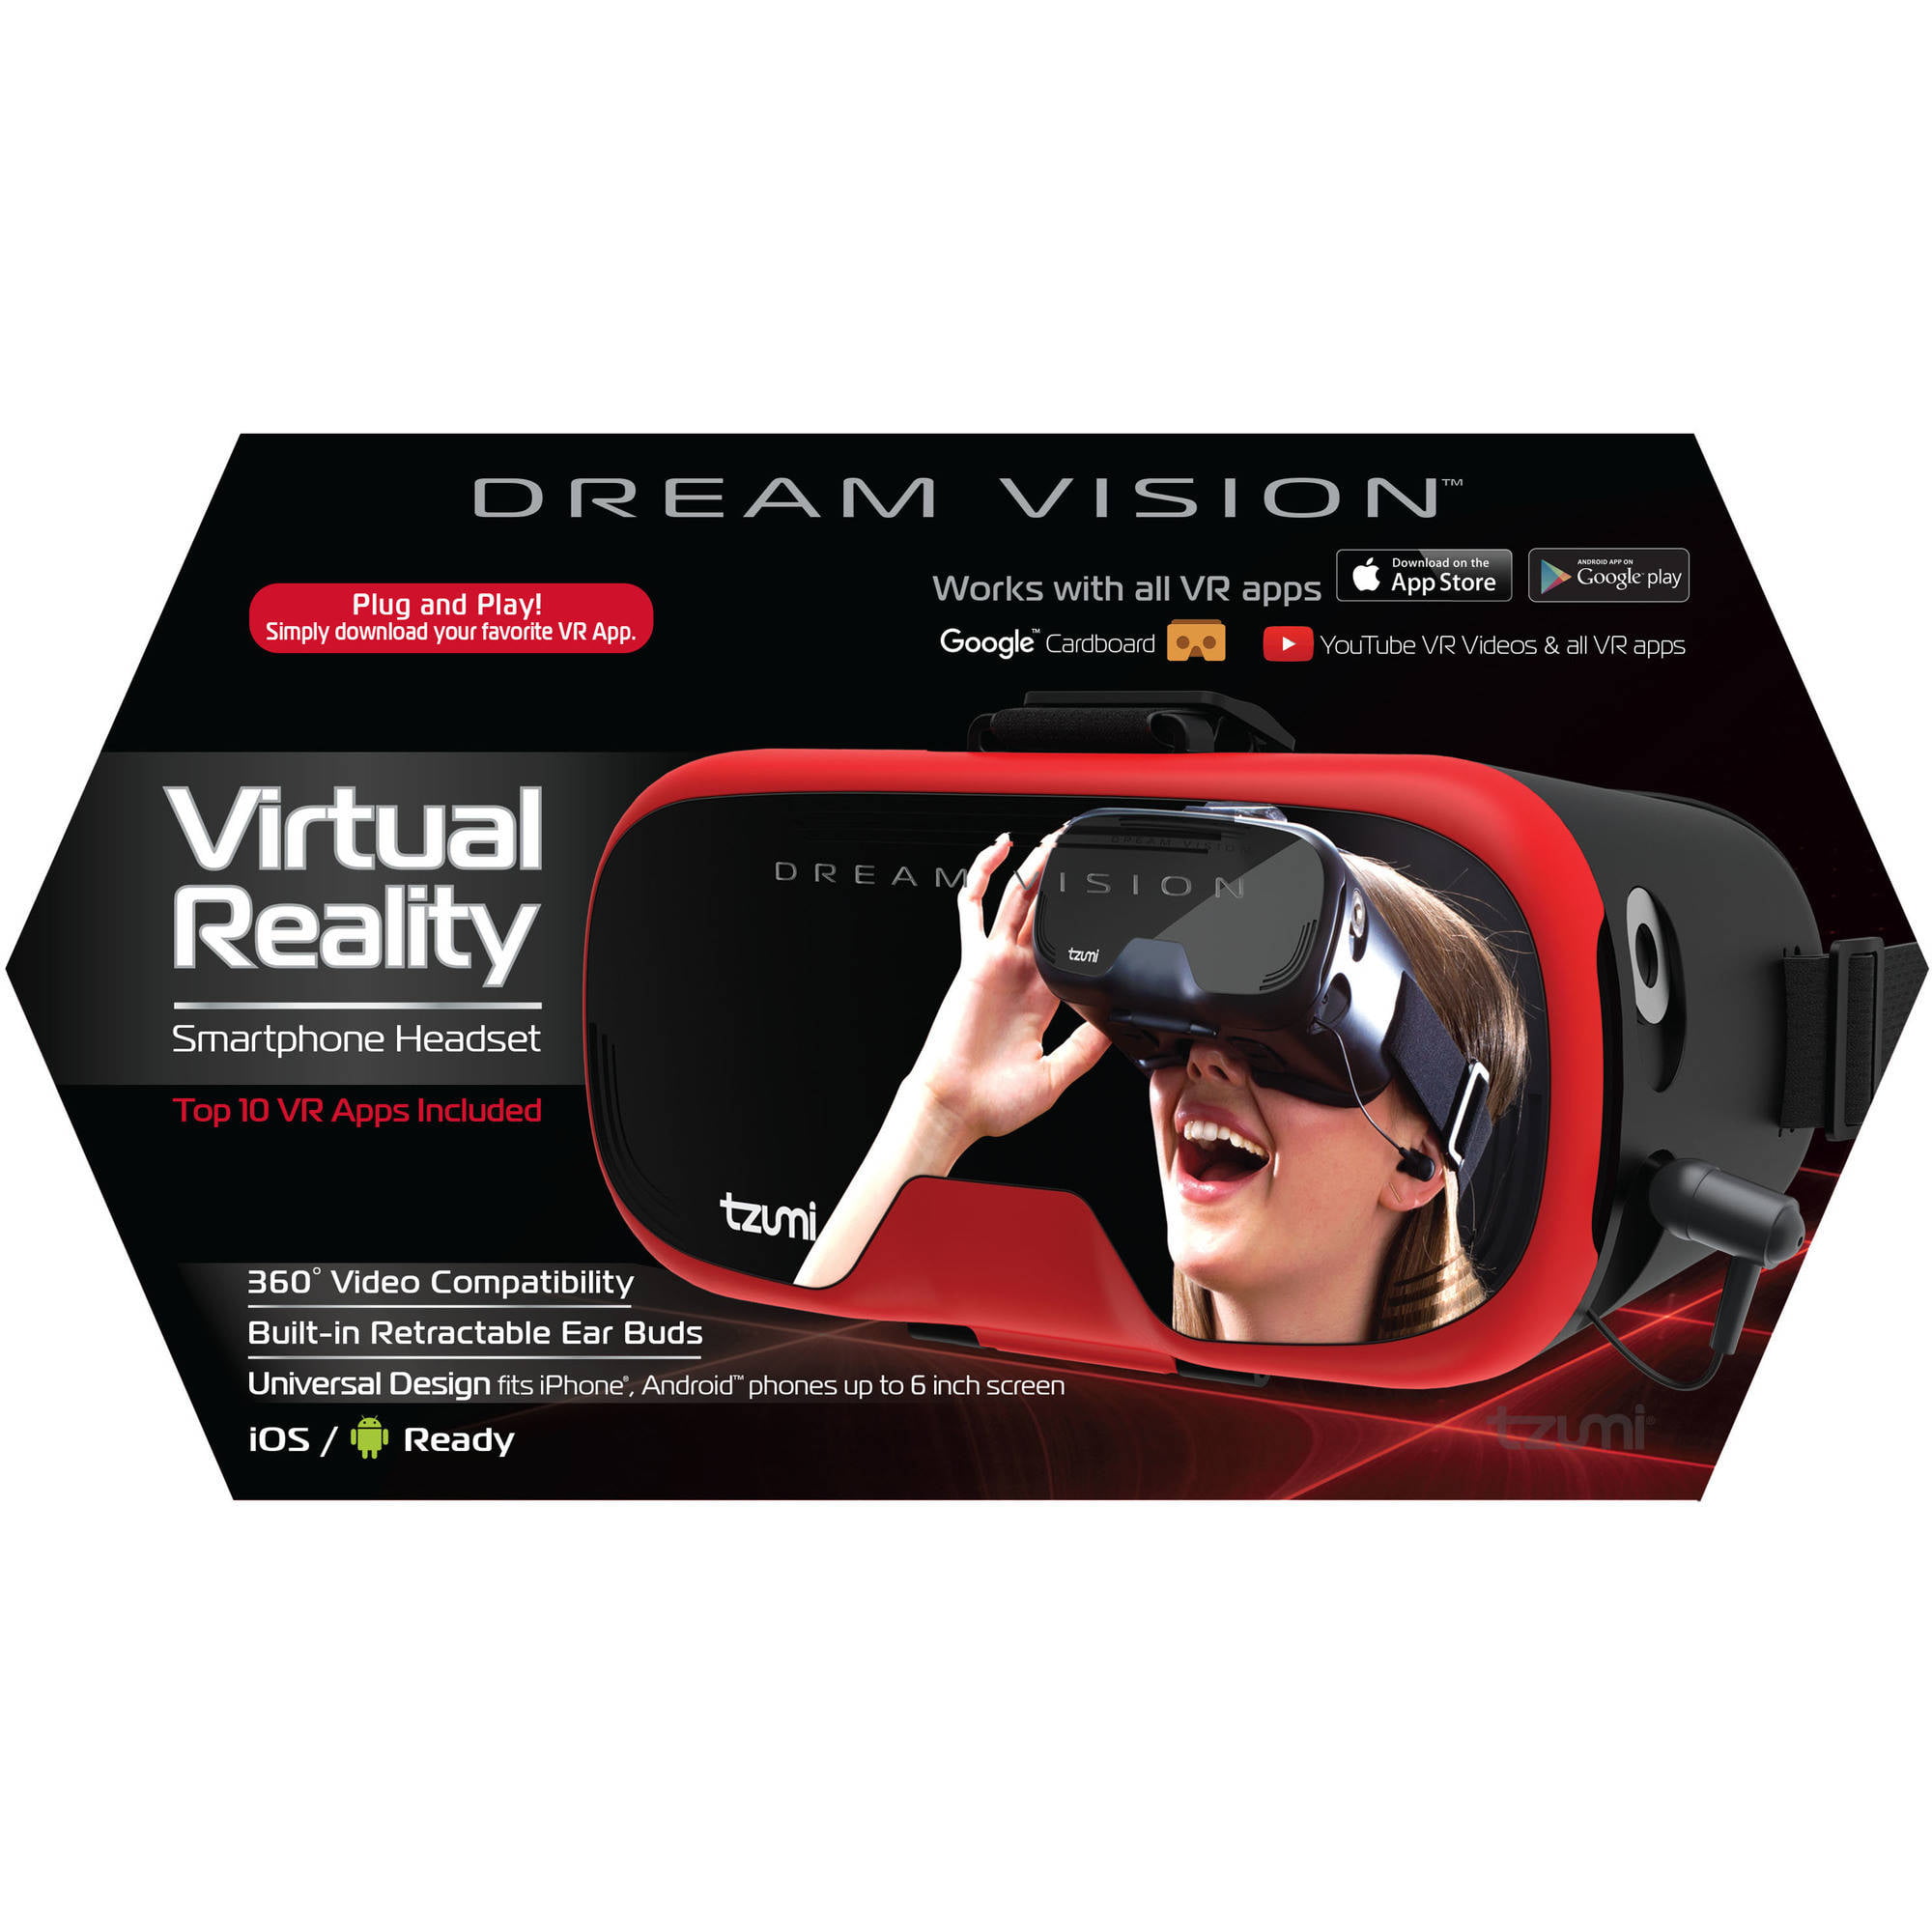 Vr vision pro. ВР Вижн. Tzumi Dream Vision Pro. Vision - шнур Vision VR 7f. Dream Vision by Tzumi.